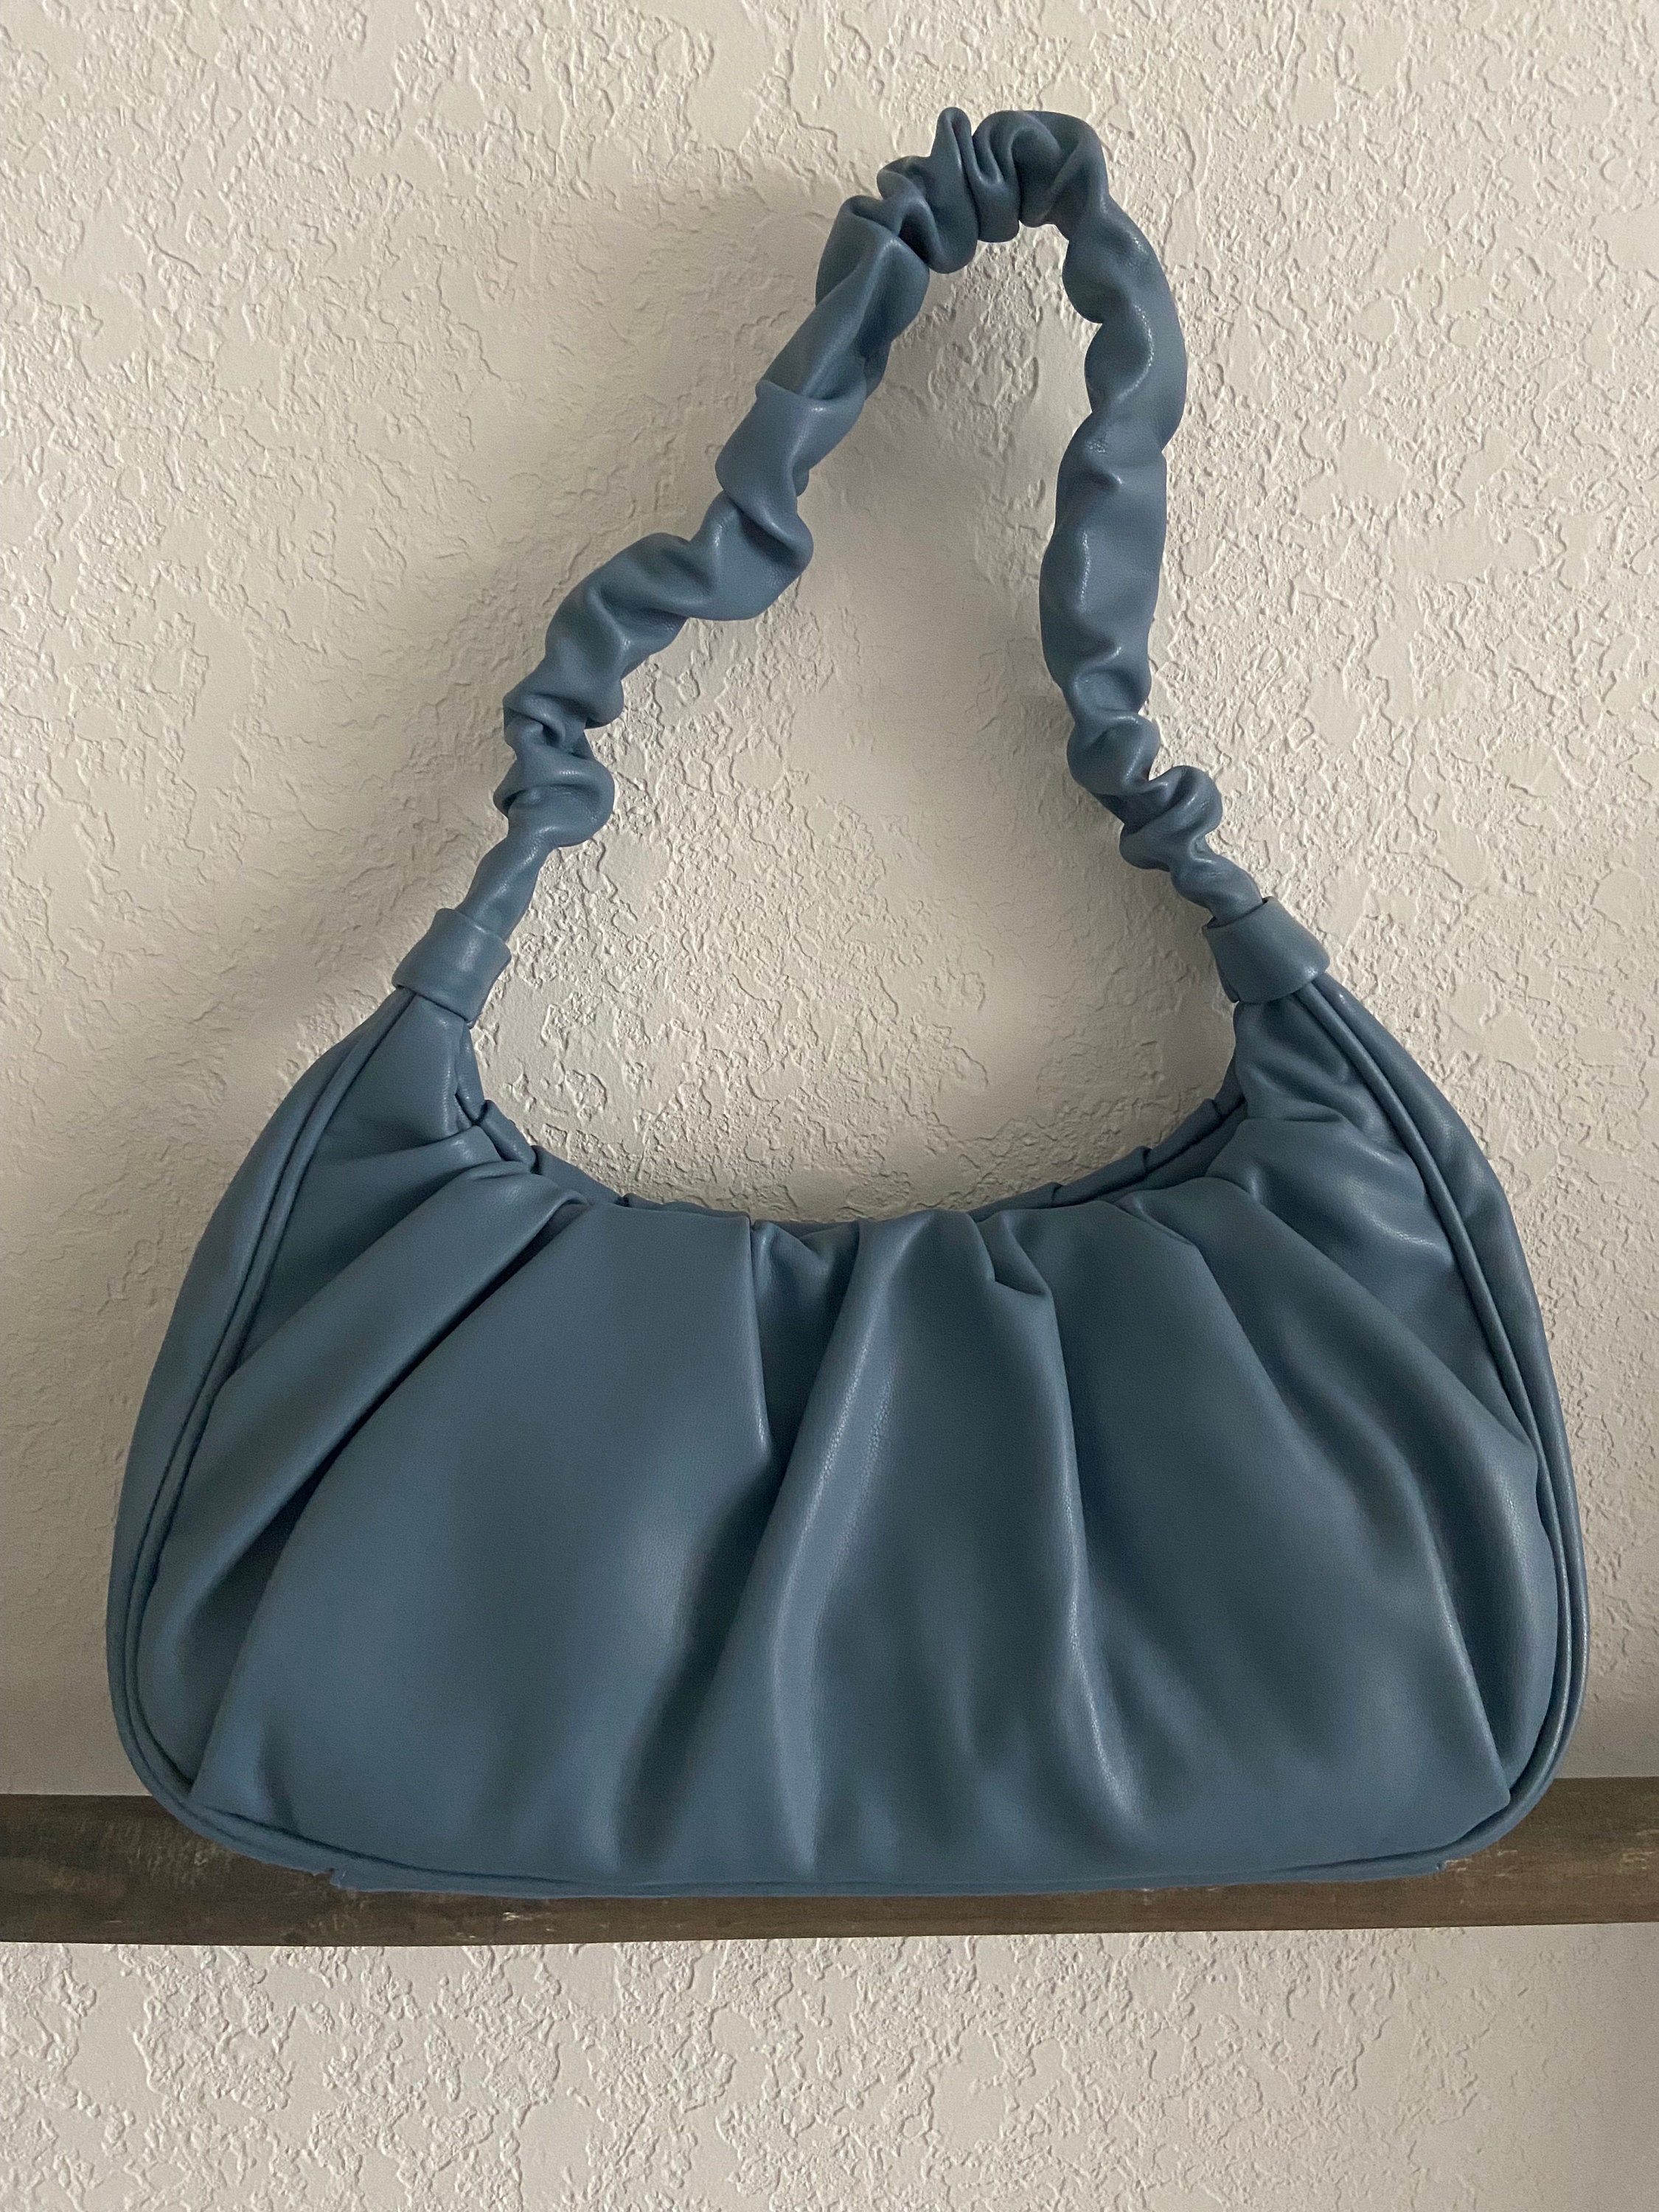 Chain & Heart Decor Ruched Bag, Black Pleated Small Handbag Soft PU Women's  Shoulder Bag Chain Decor Fashion Bag